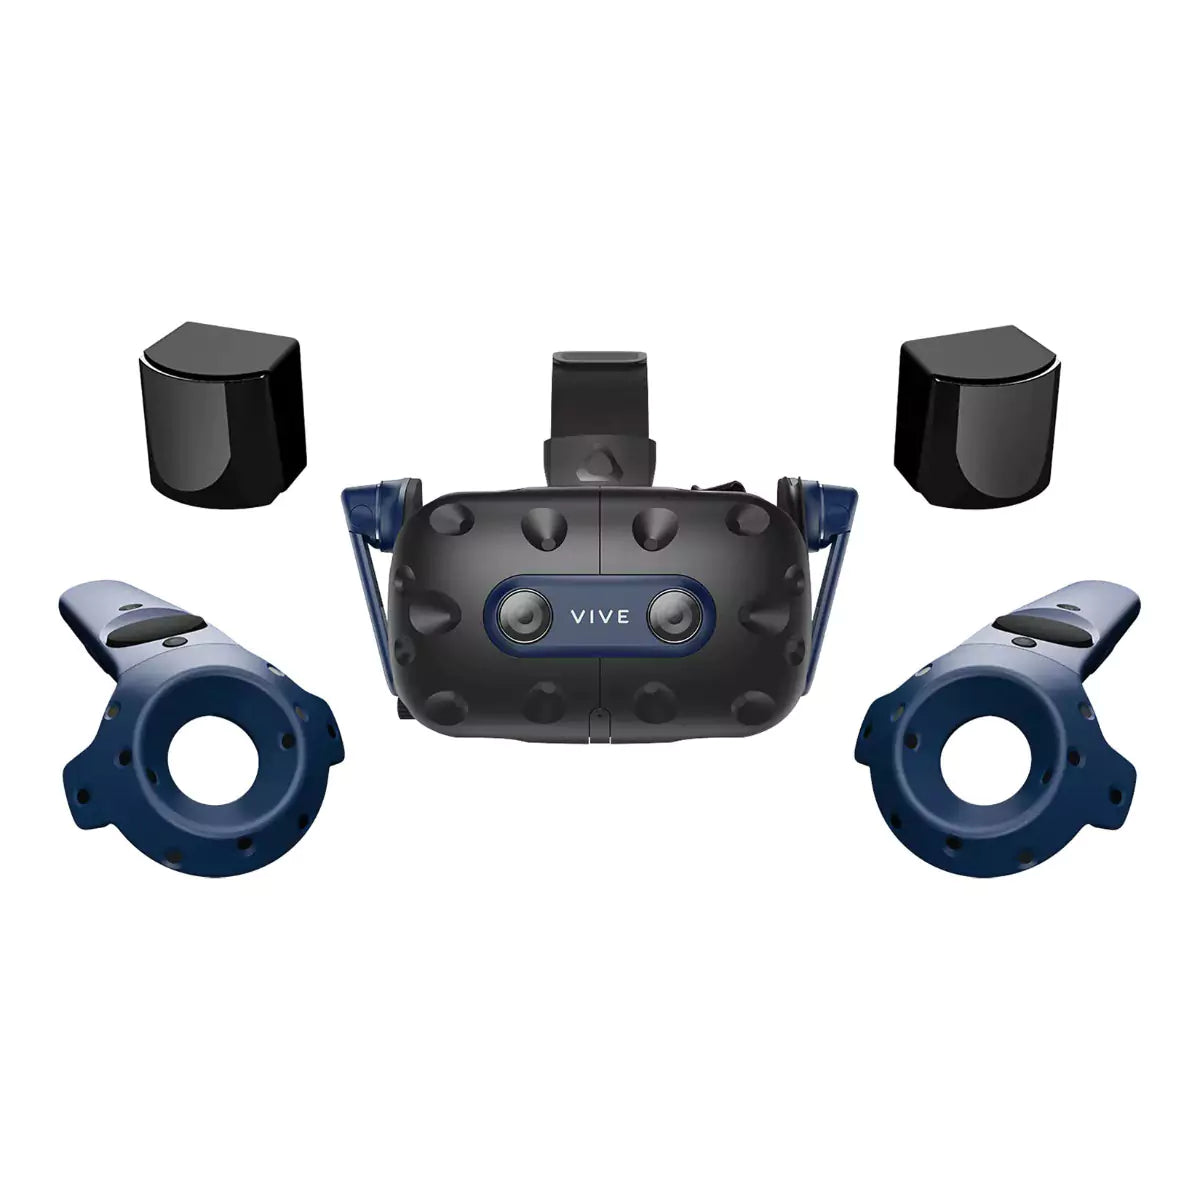  HTC VIVE Pro 2 Virtual Reality System : Video Games